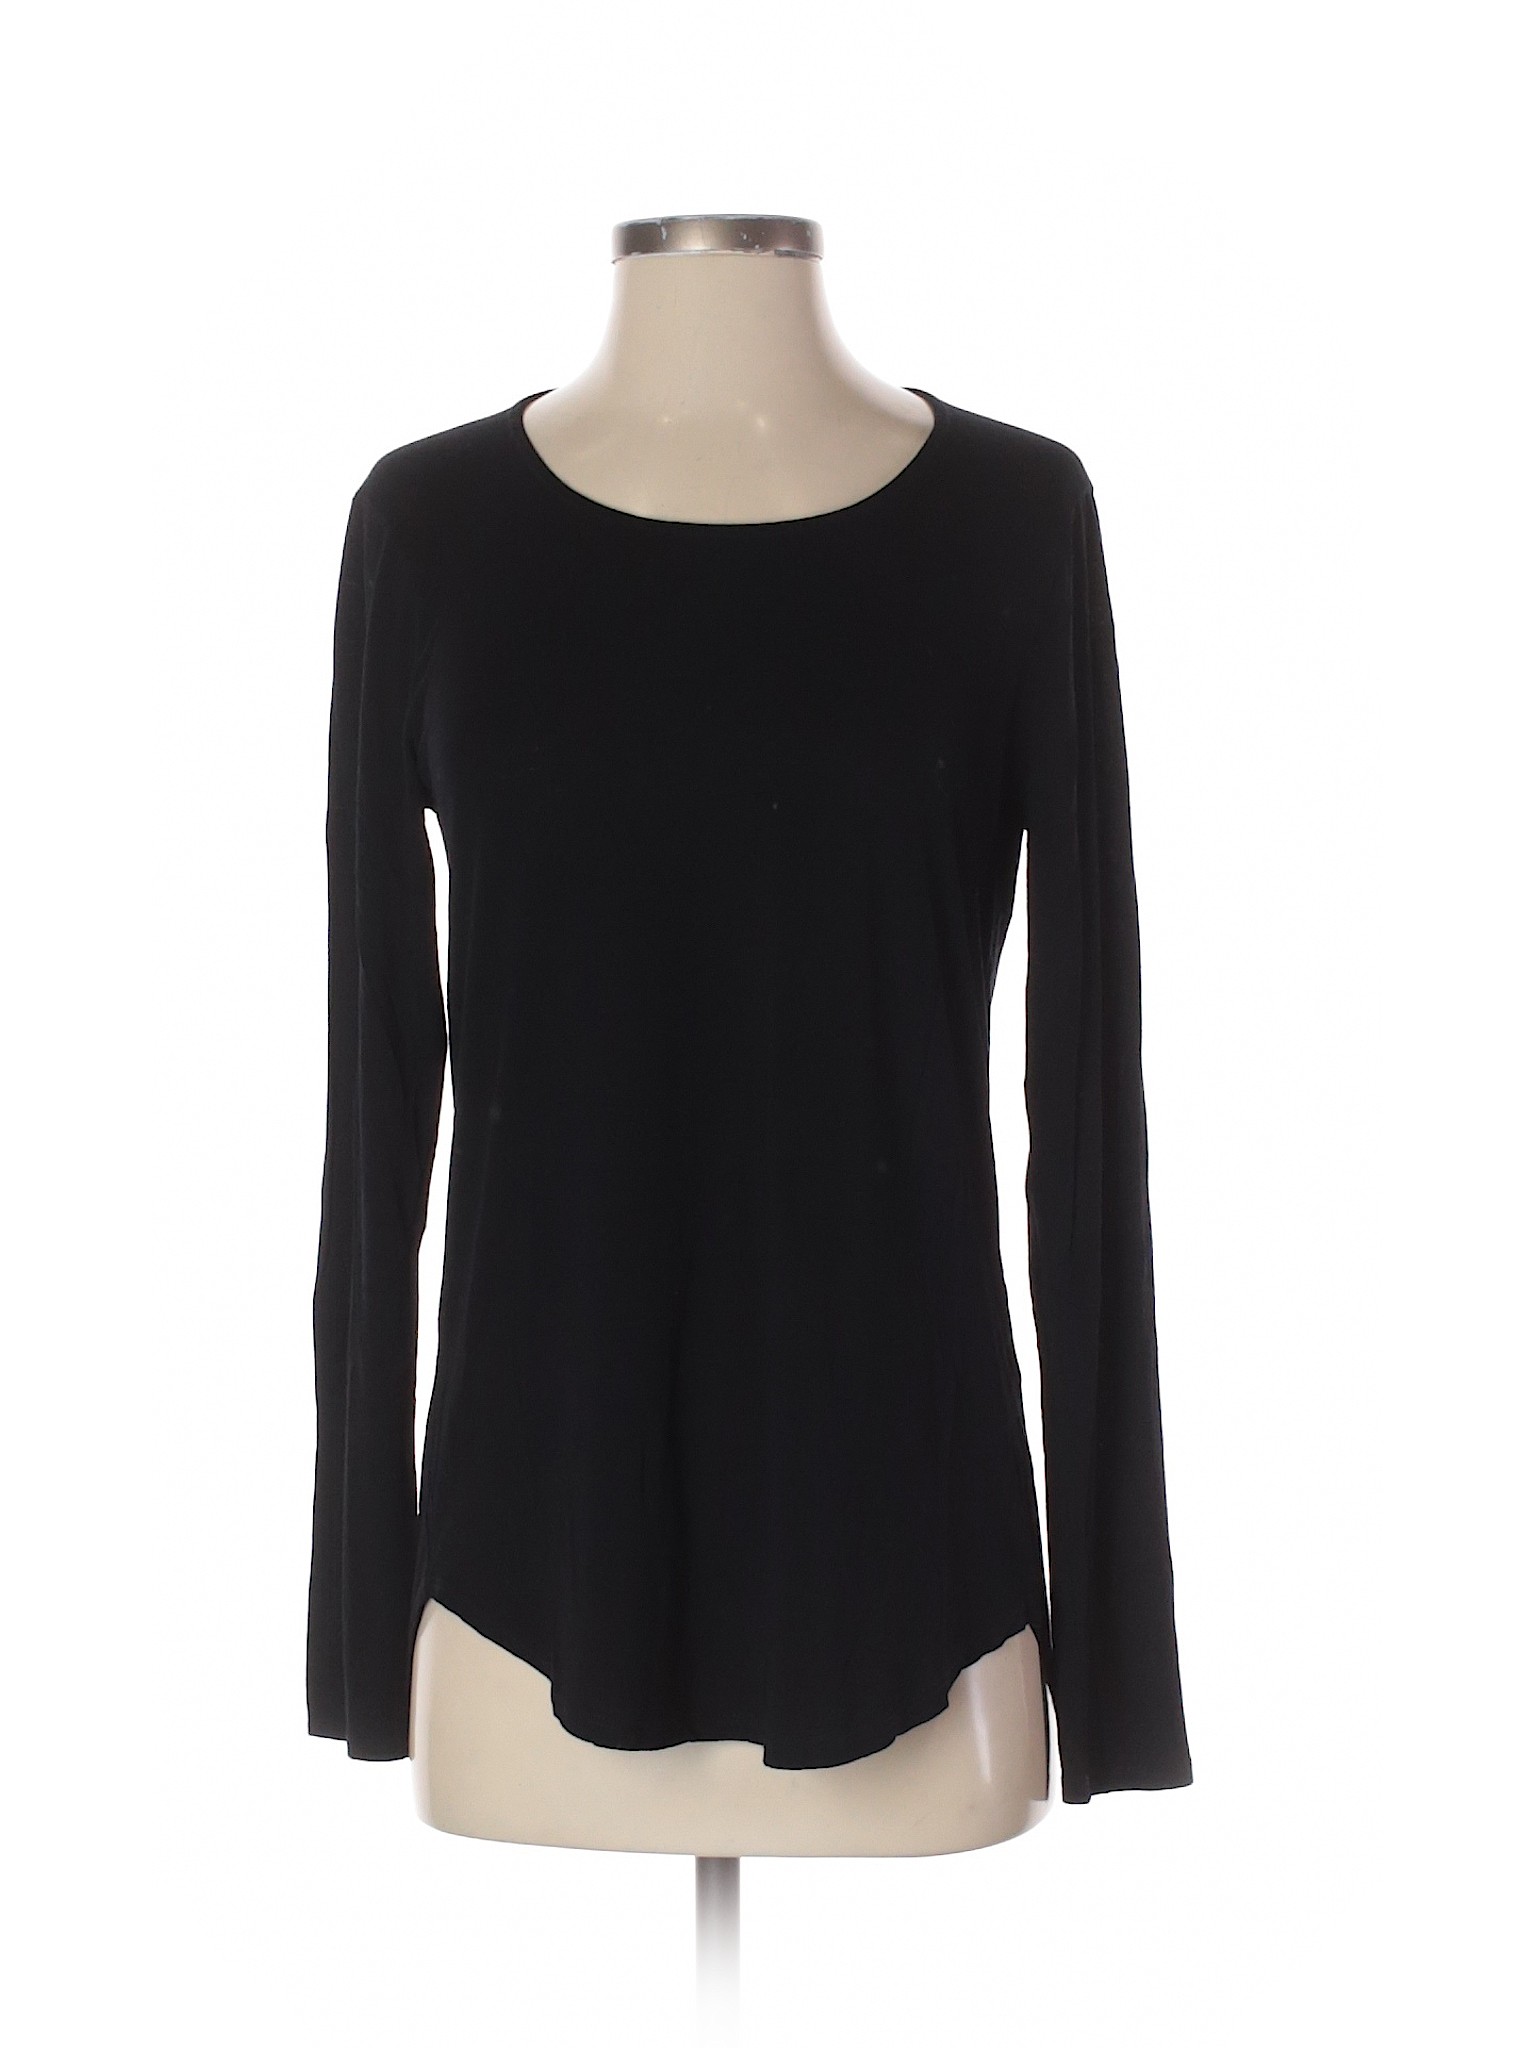 Michael Stars Women Black Long Sleeve Top S | eBay